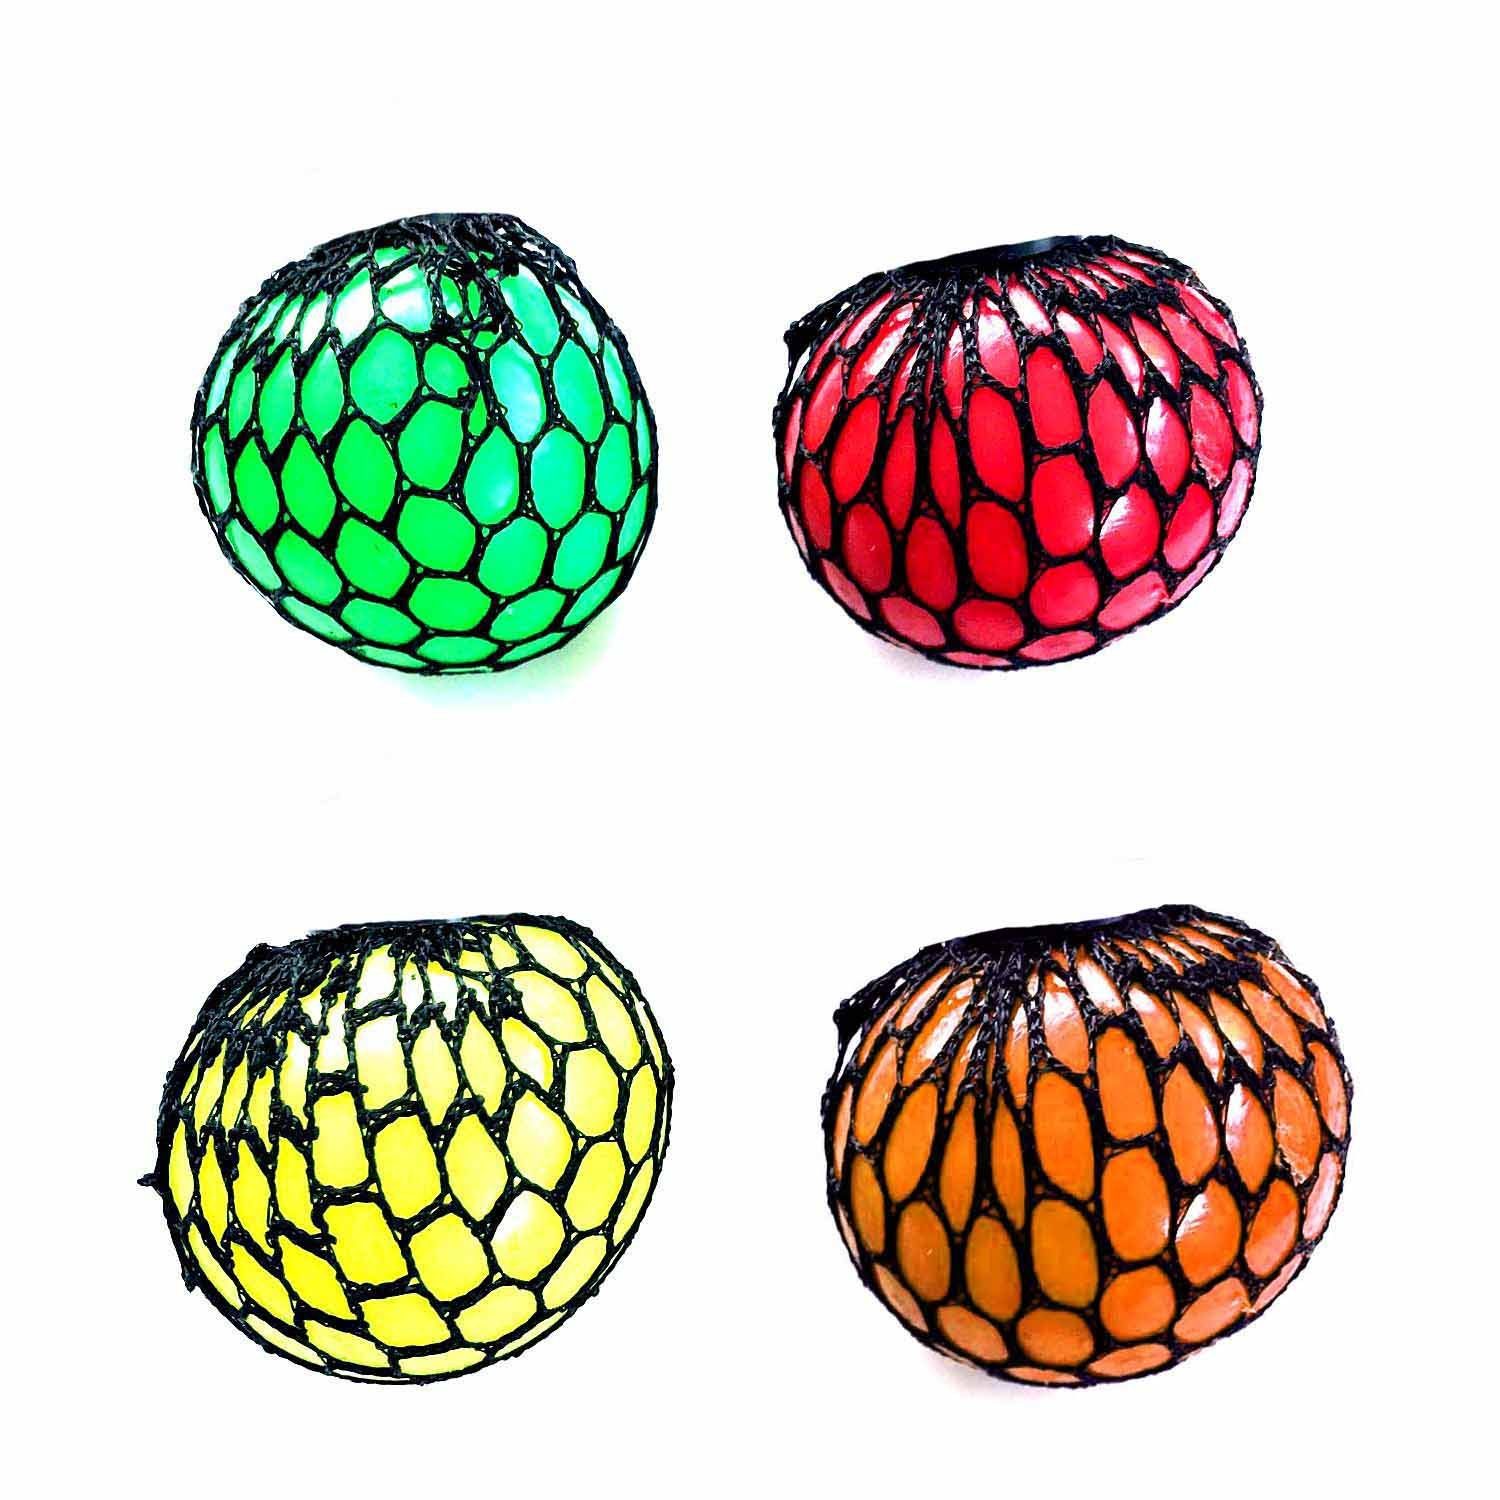 Quetschball orange gelb HAC24 Anti Ball im Netz grün, Knautschball Spielball (Set), Stress rot Stressball und Knetball